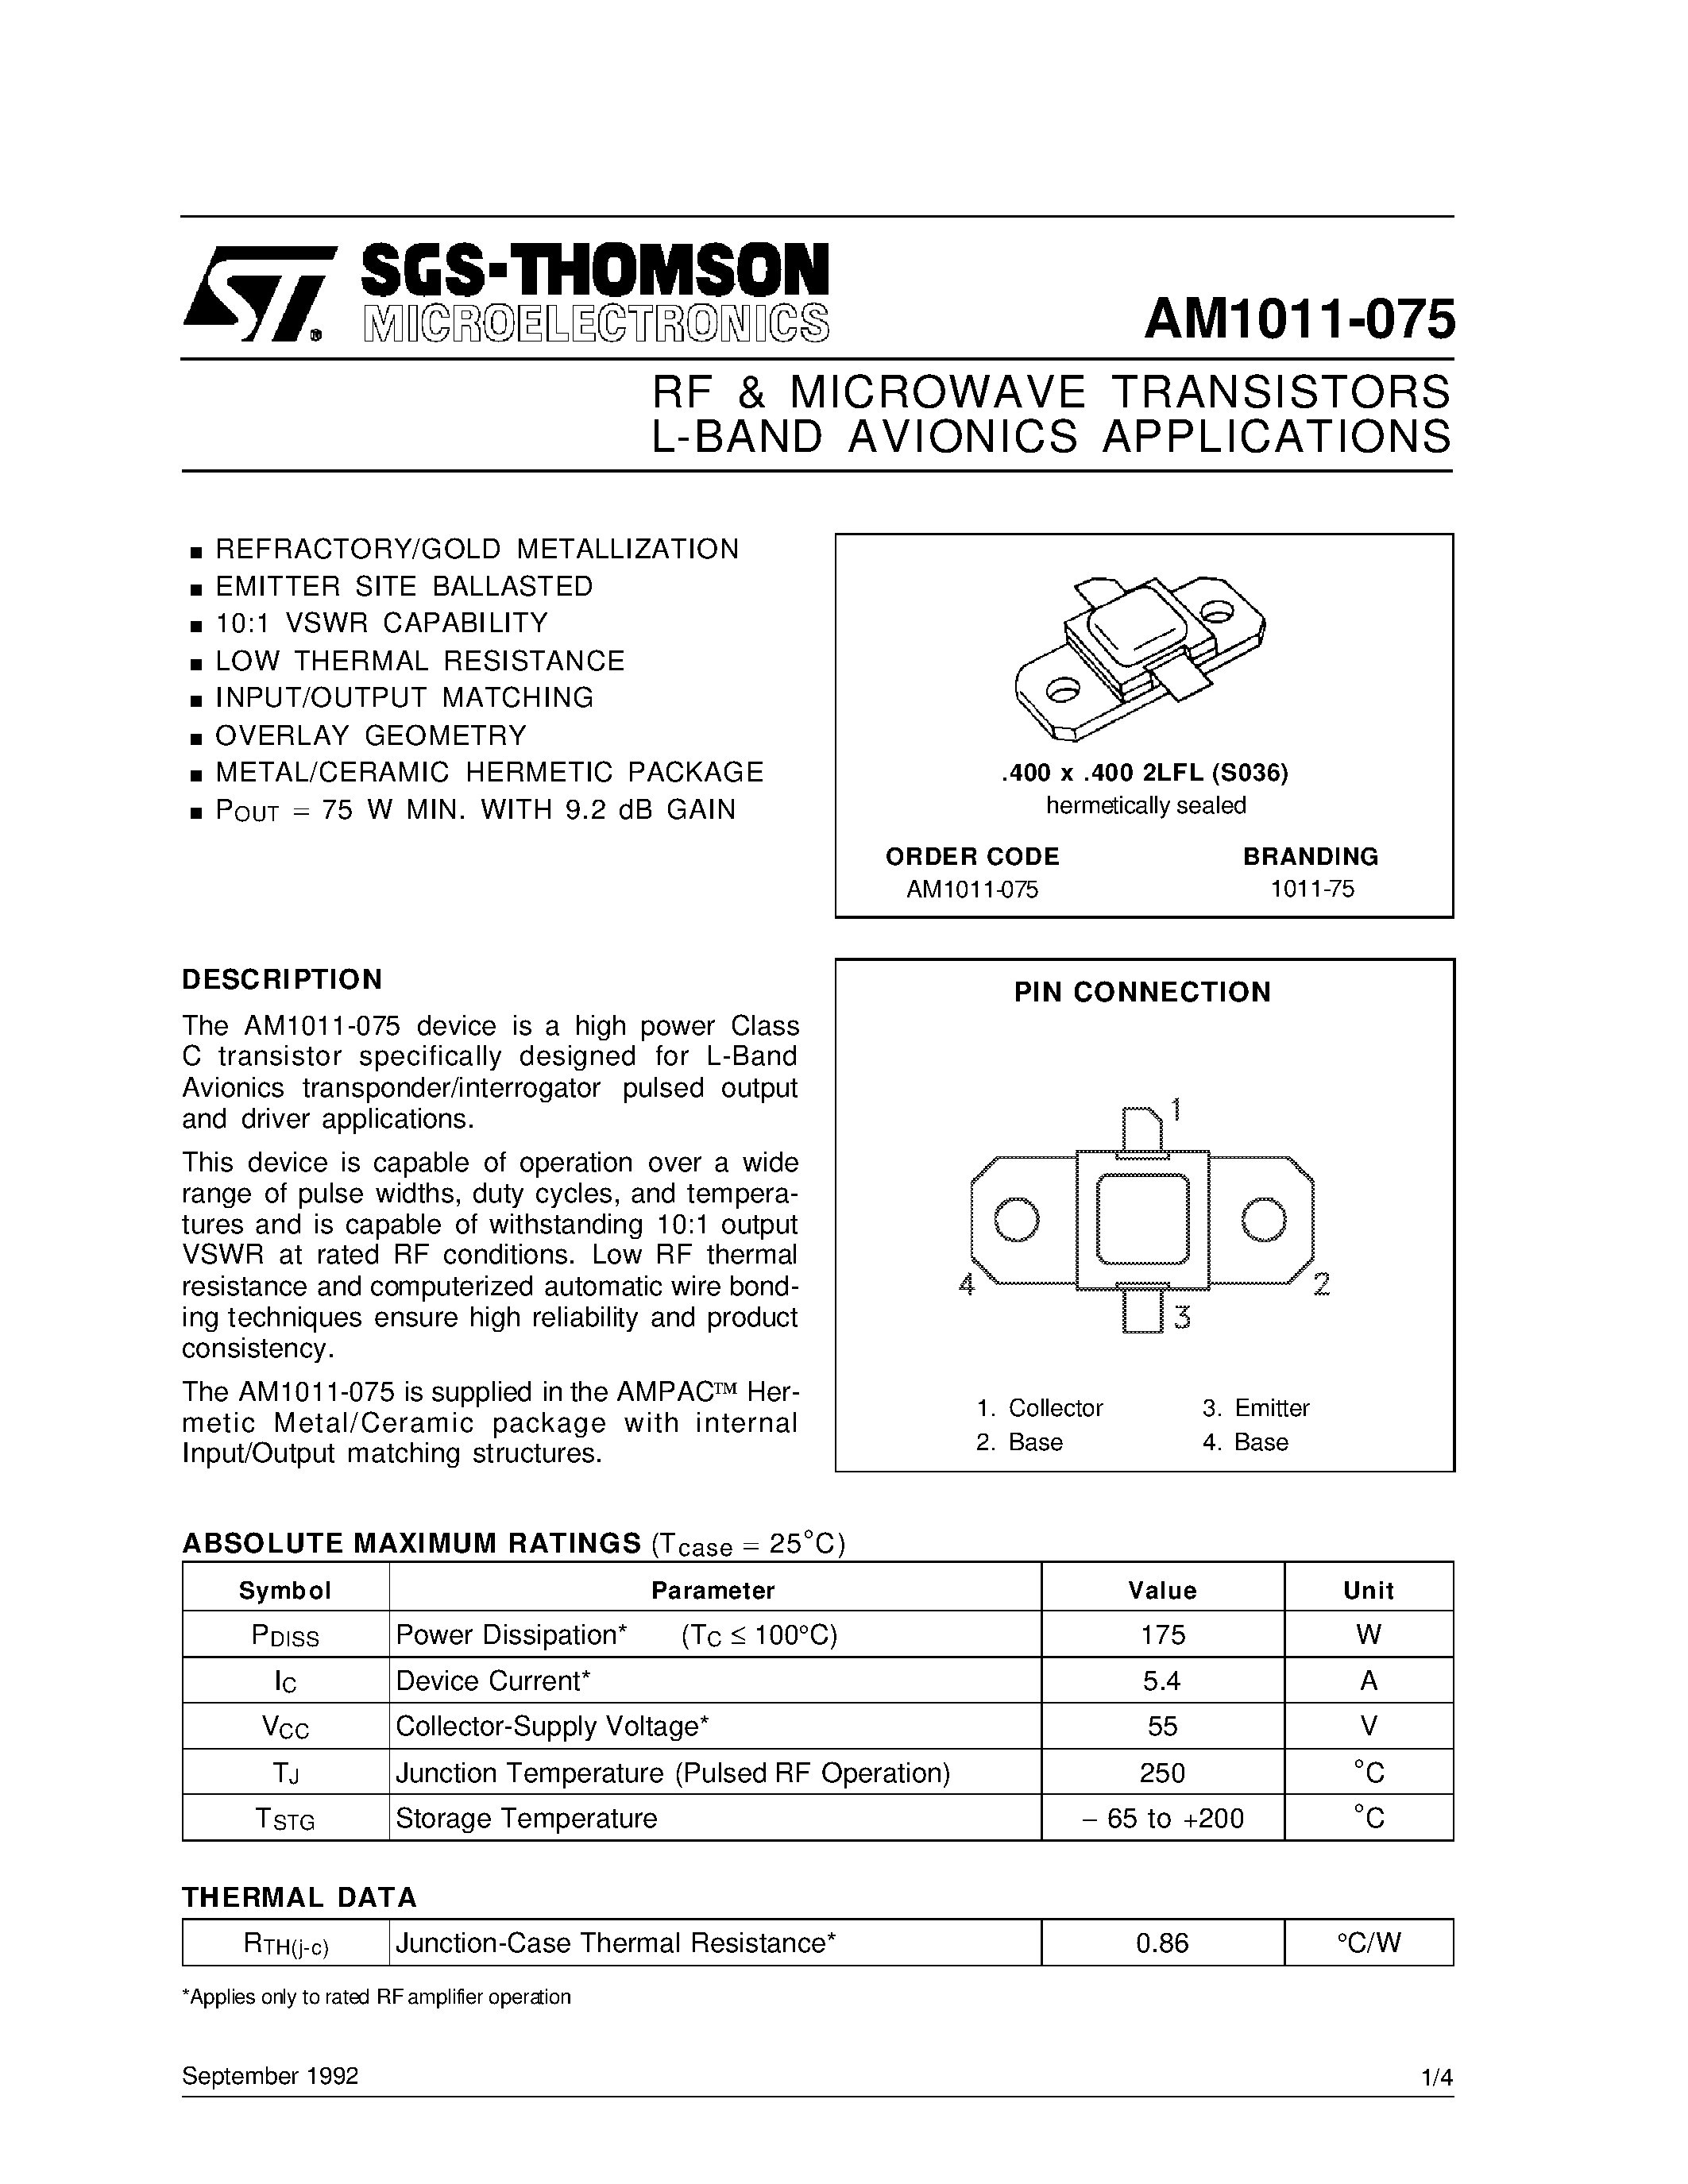 Datasheet AM1011-075 - L-BAND AVIONICS APPLICATIONS RF & MICROWAVE TRANSISTORS page 1